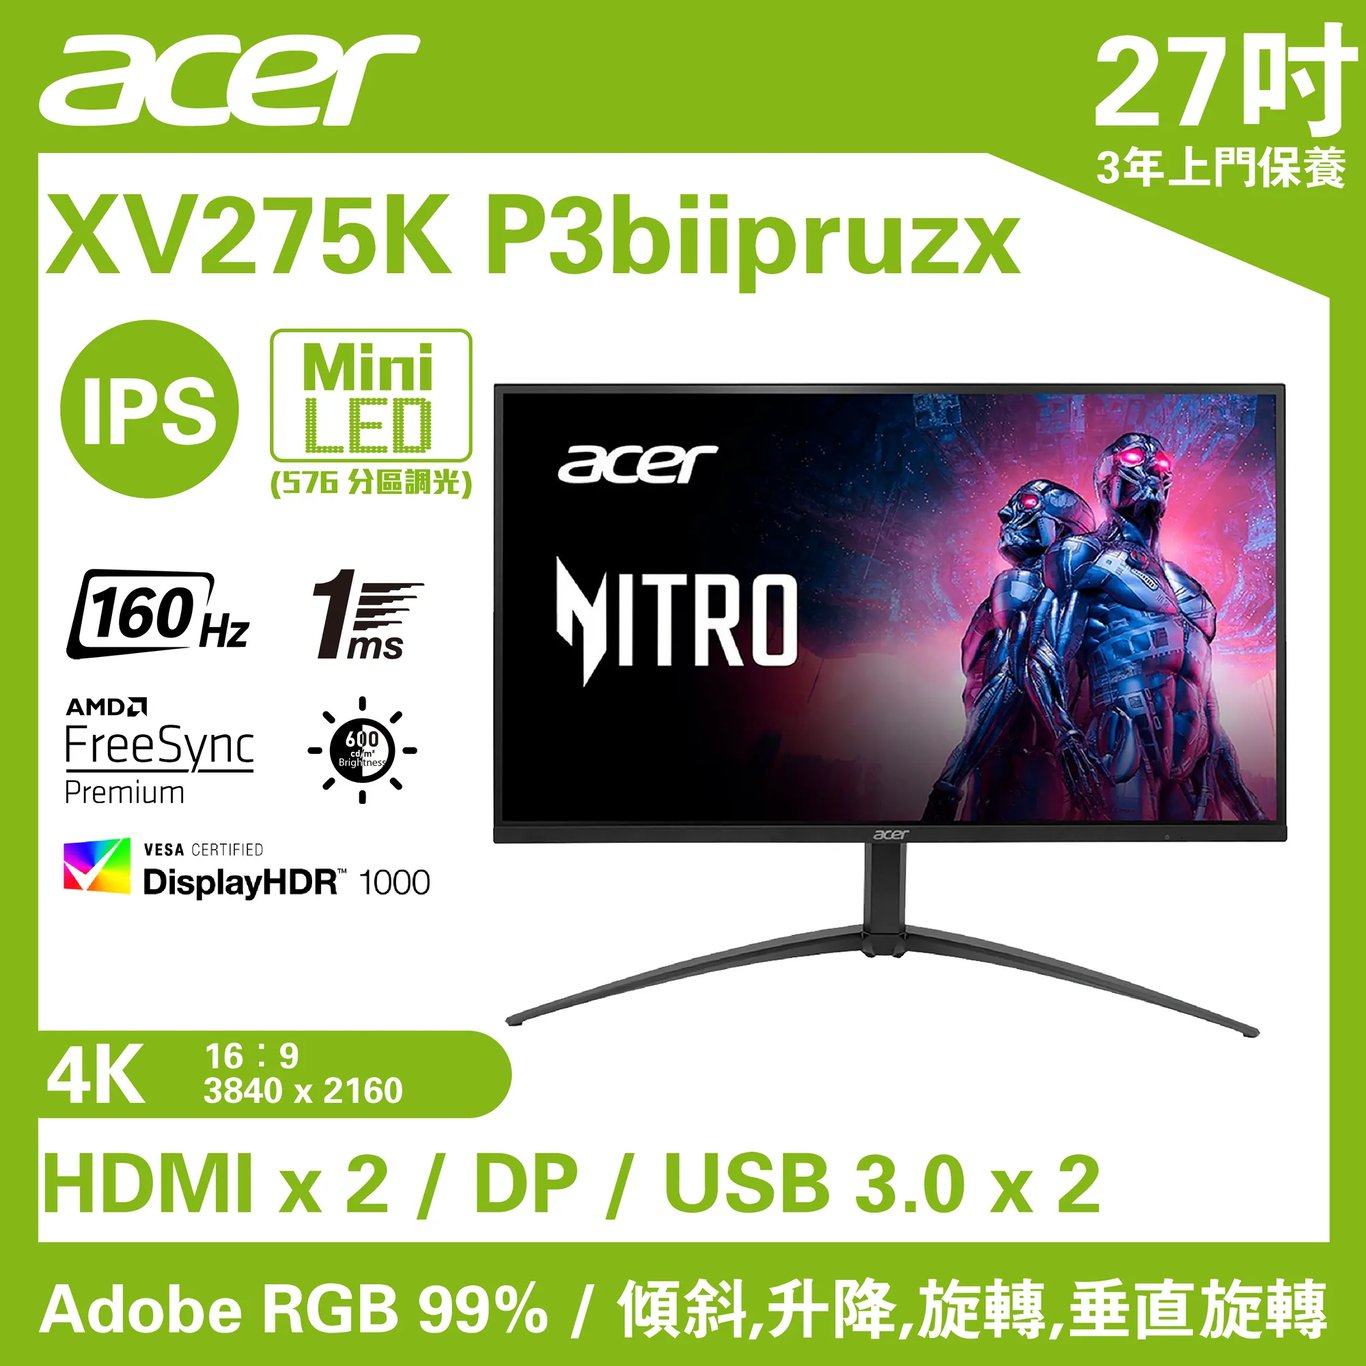 Acer NITRO XV275K P3biipruzx 電競顯示器 (27吋 / 4K UHD / 160Hz / IPS / MiniLED / Type-C 90W / DisplayHDR 1000 / FreeSync Premium ) - 3840 x 2160